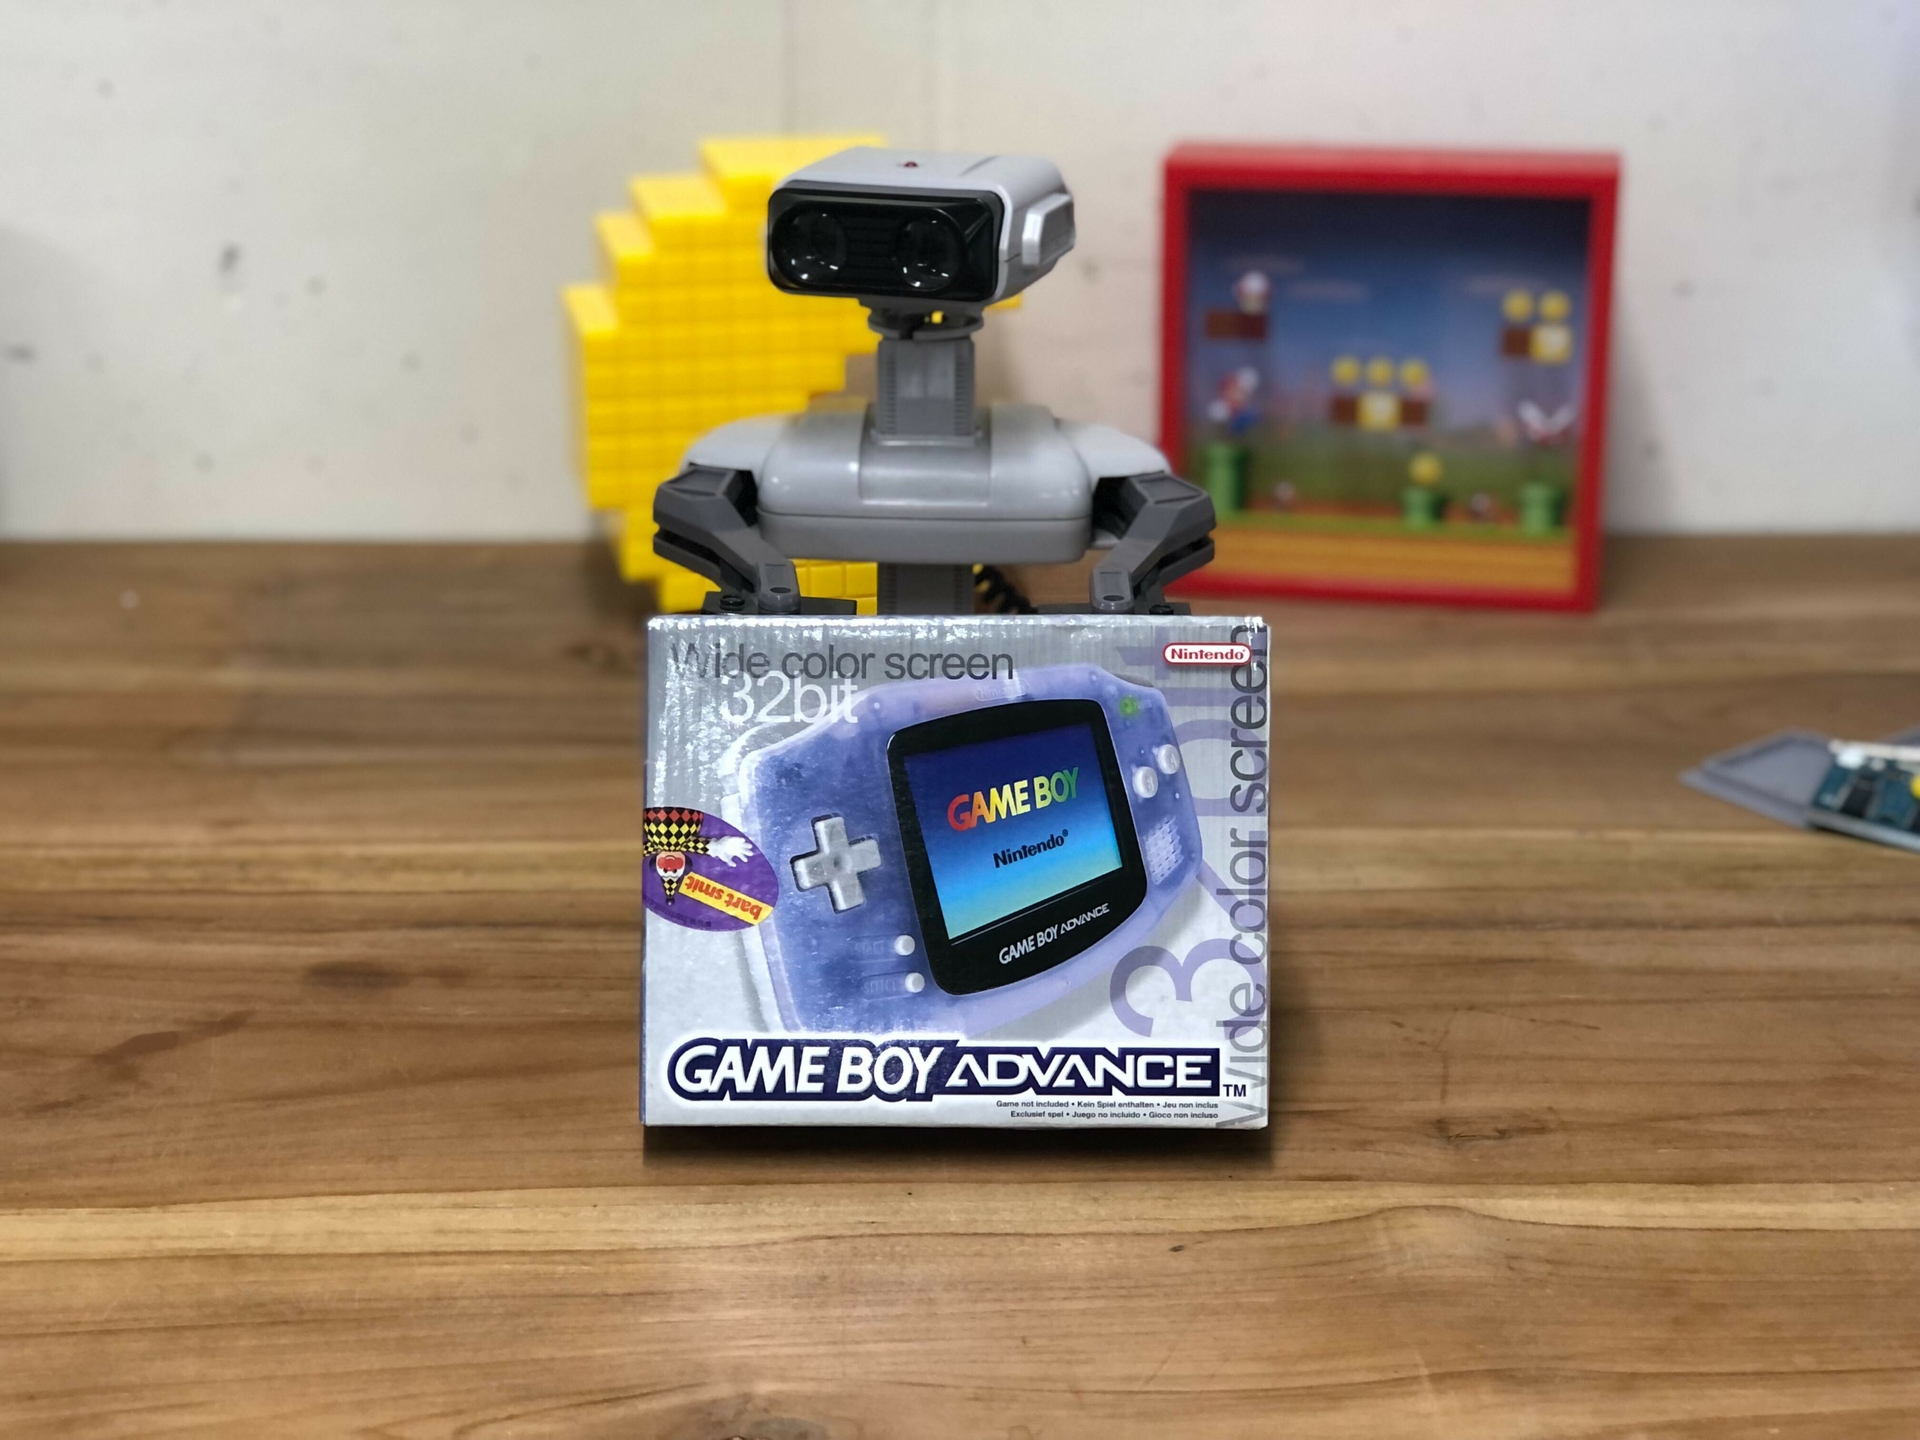 Gameboy Advance Transparent Blue [Complete] | Gameboy Advance Hardware | RetroNintendoKopen.nl